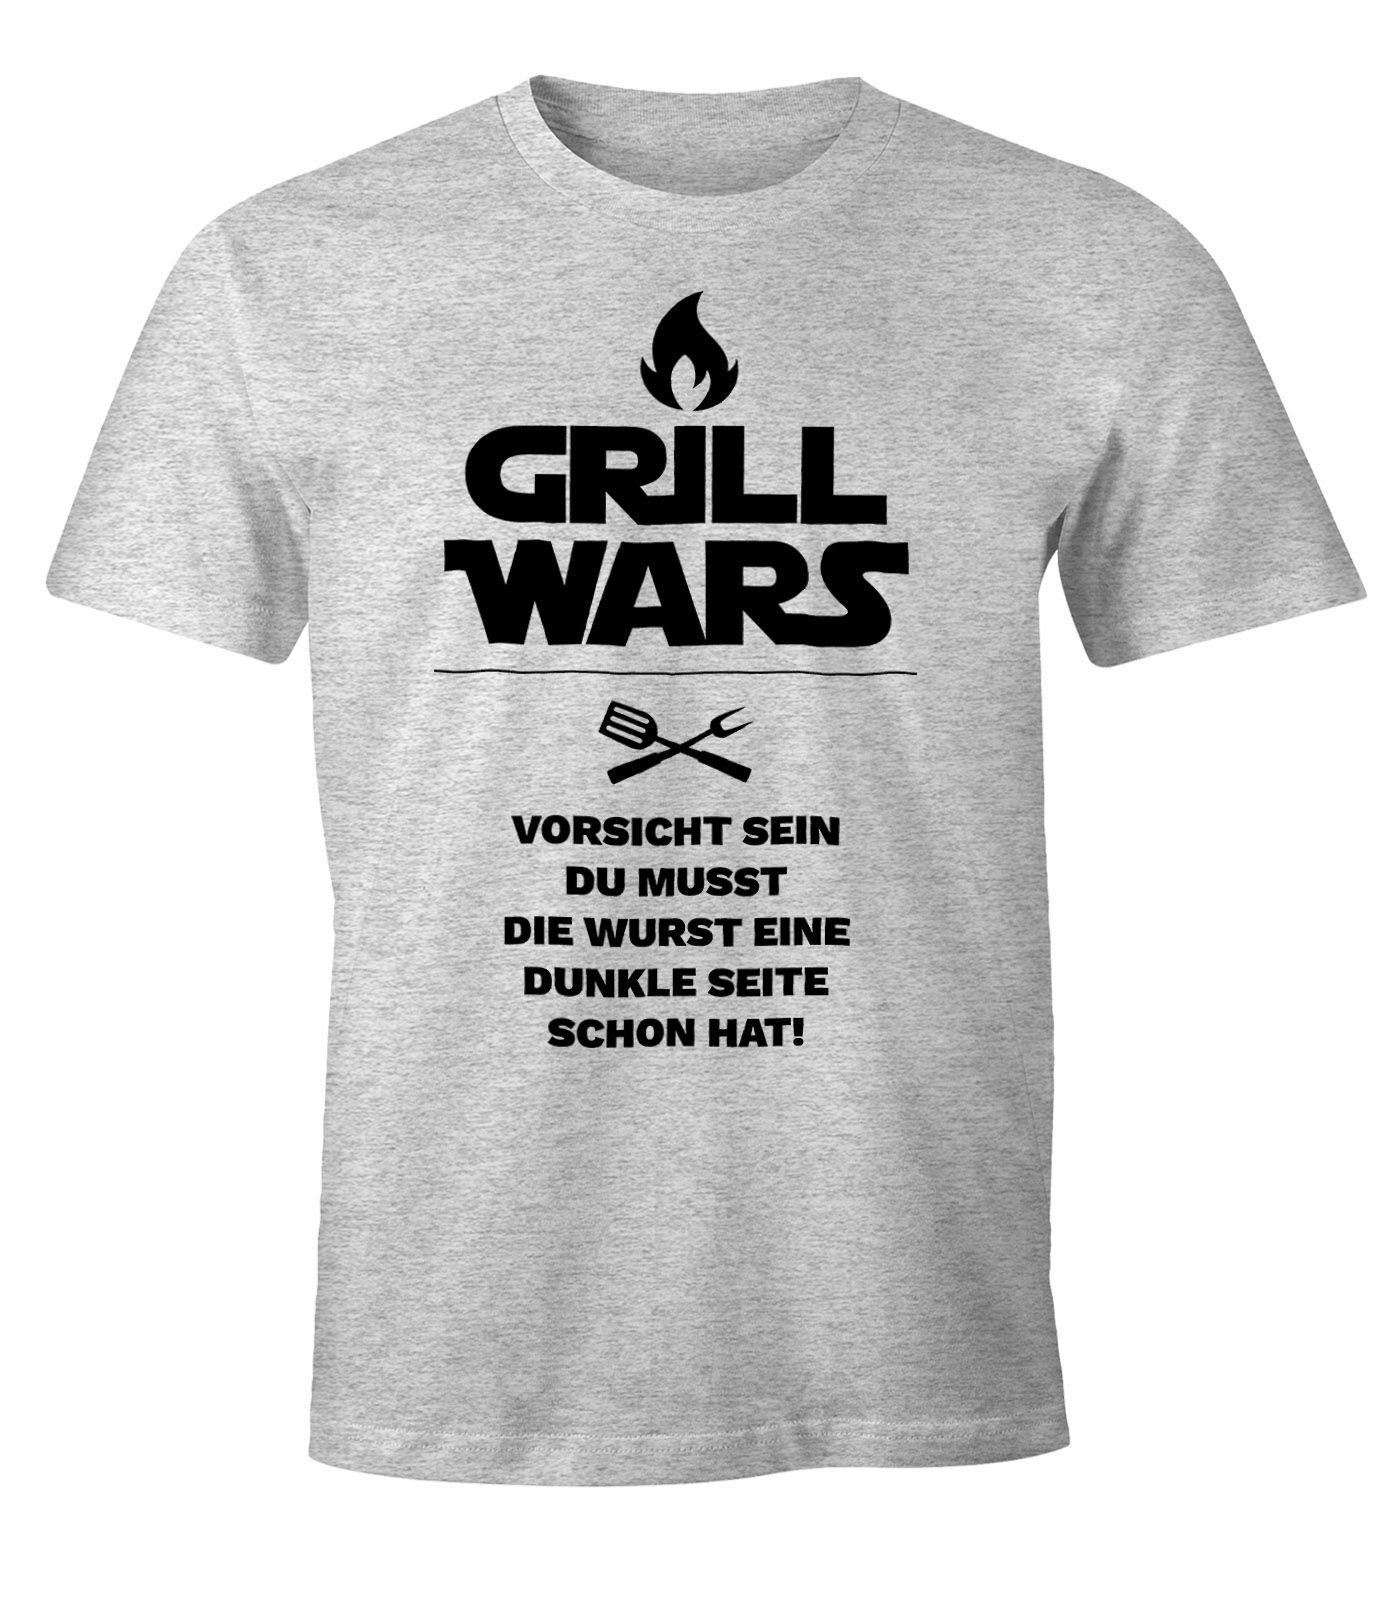 Wars mit mit Print Spruch T-Shirt Print-Shirt Herren Moonworks® grau Fun-Shirt MoonWorks Grill